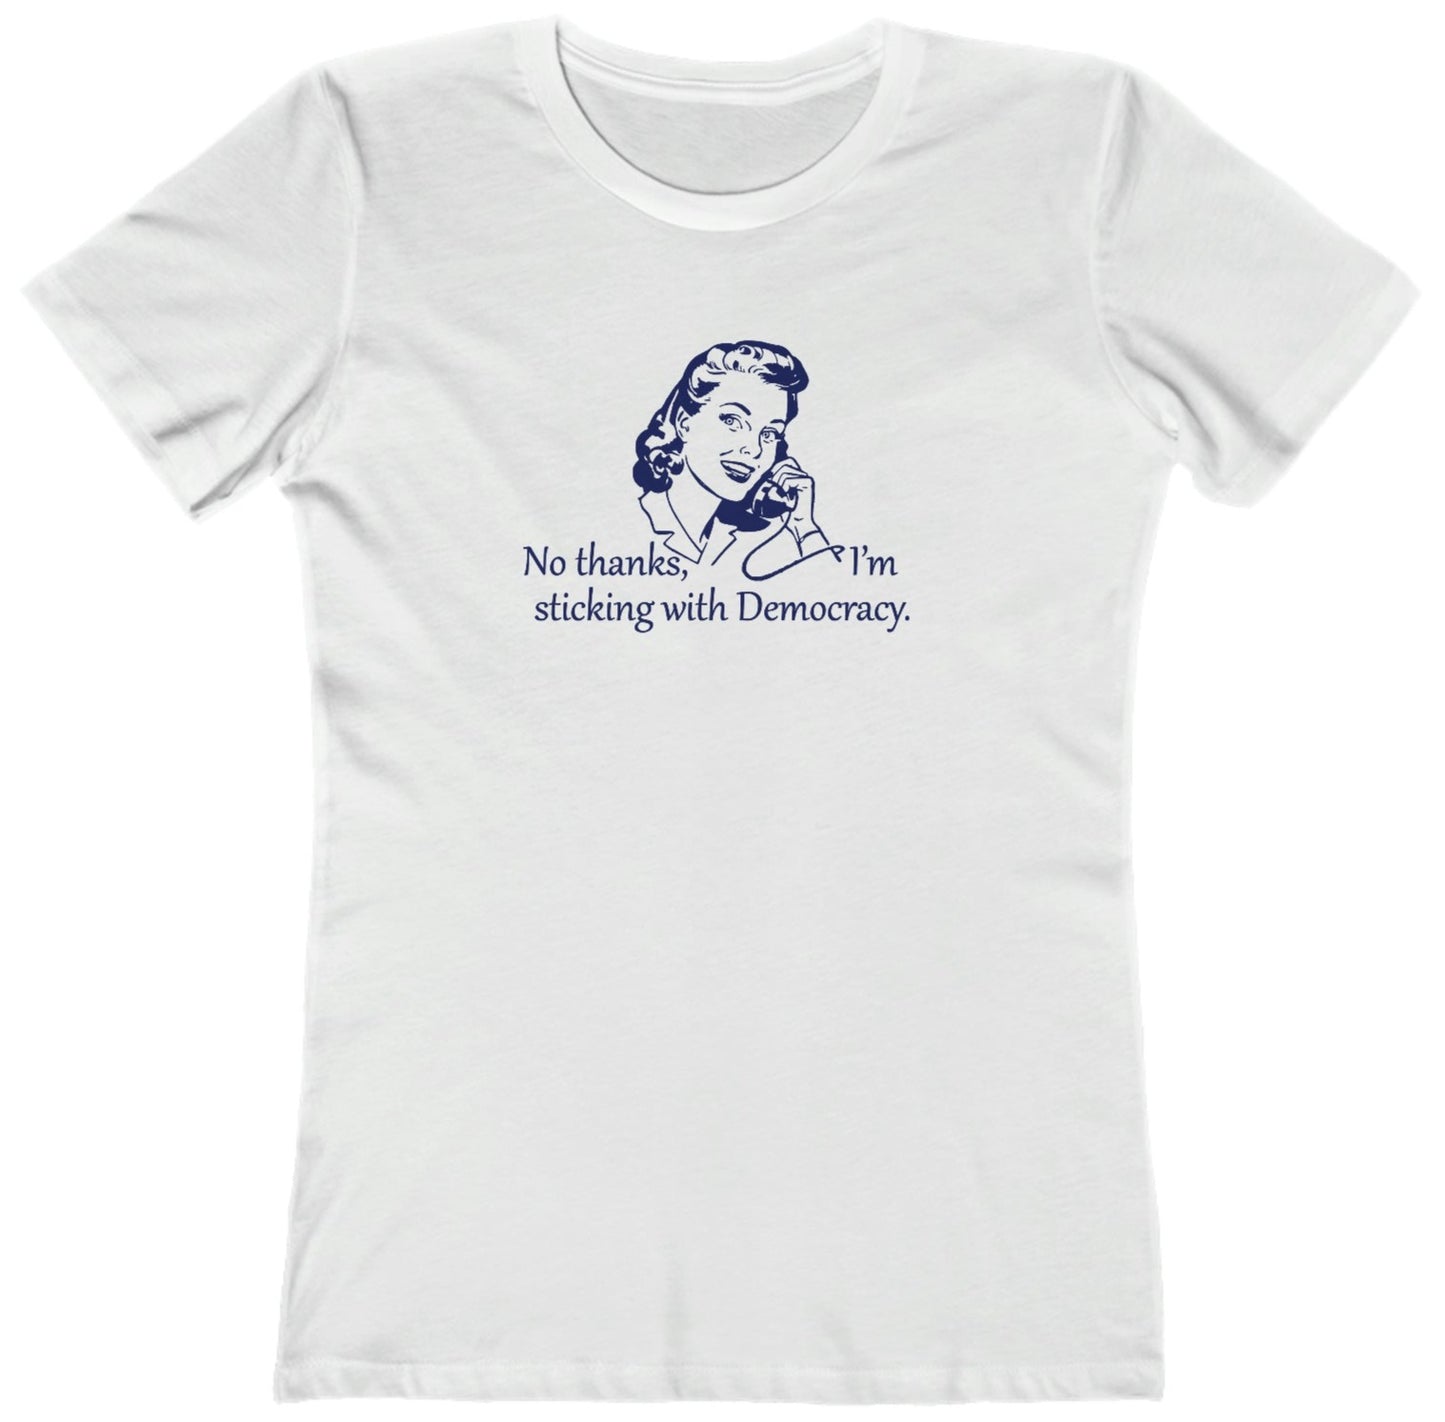 Sticking with Democracy - Women's T-Shirt